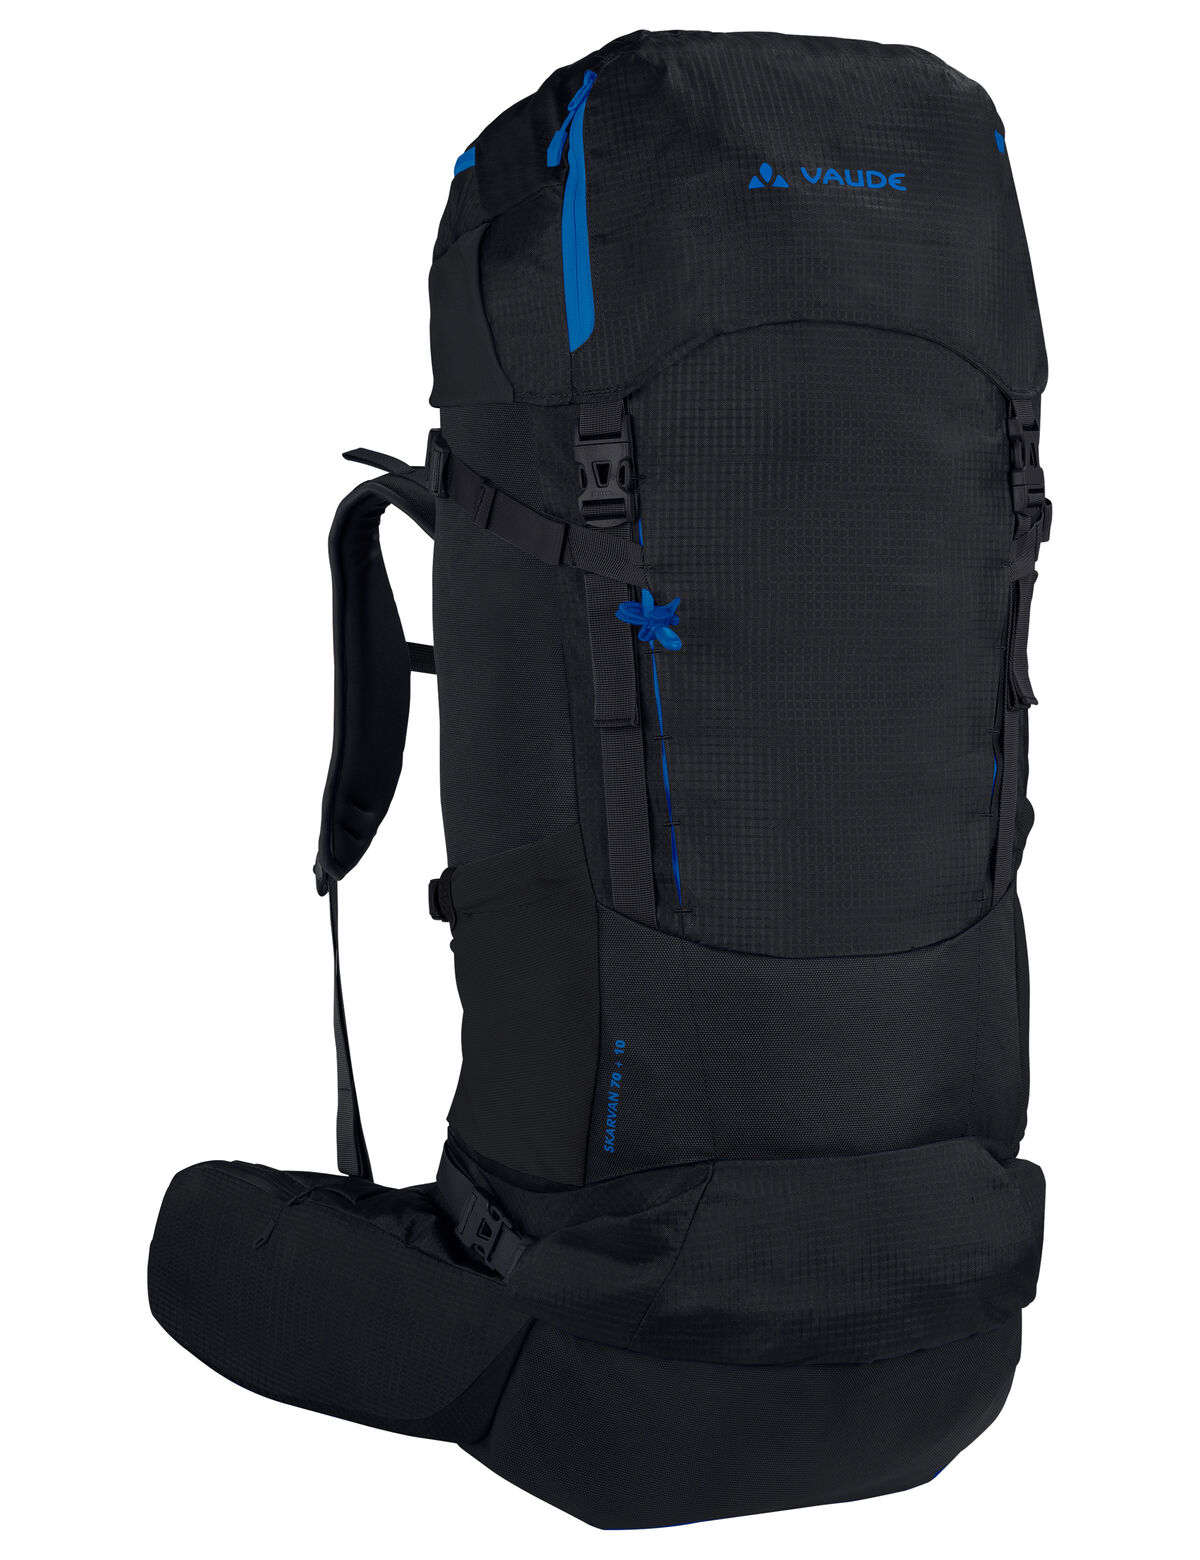 Vaude - Skarvan 70+10 M/L - Hiking backpack